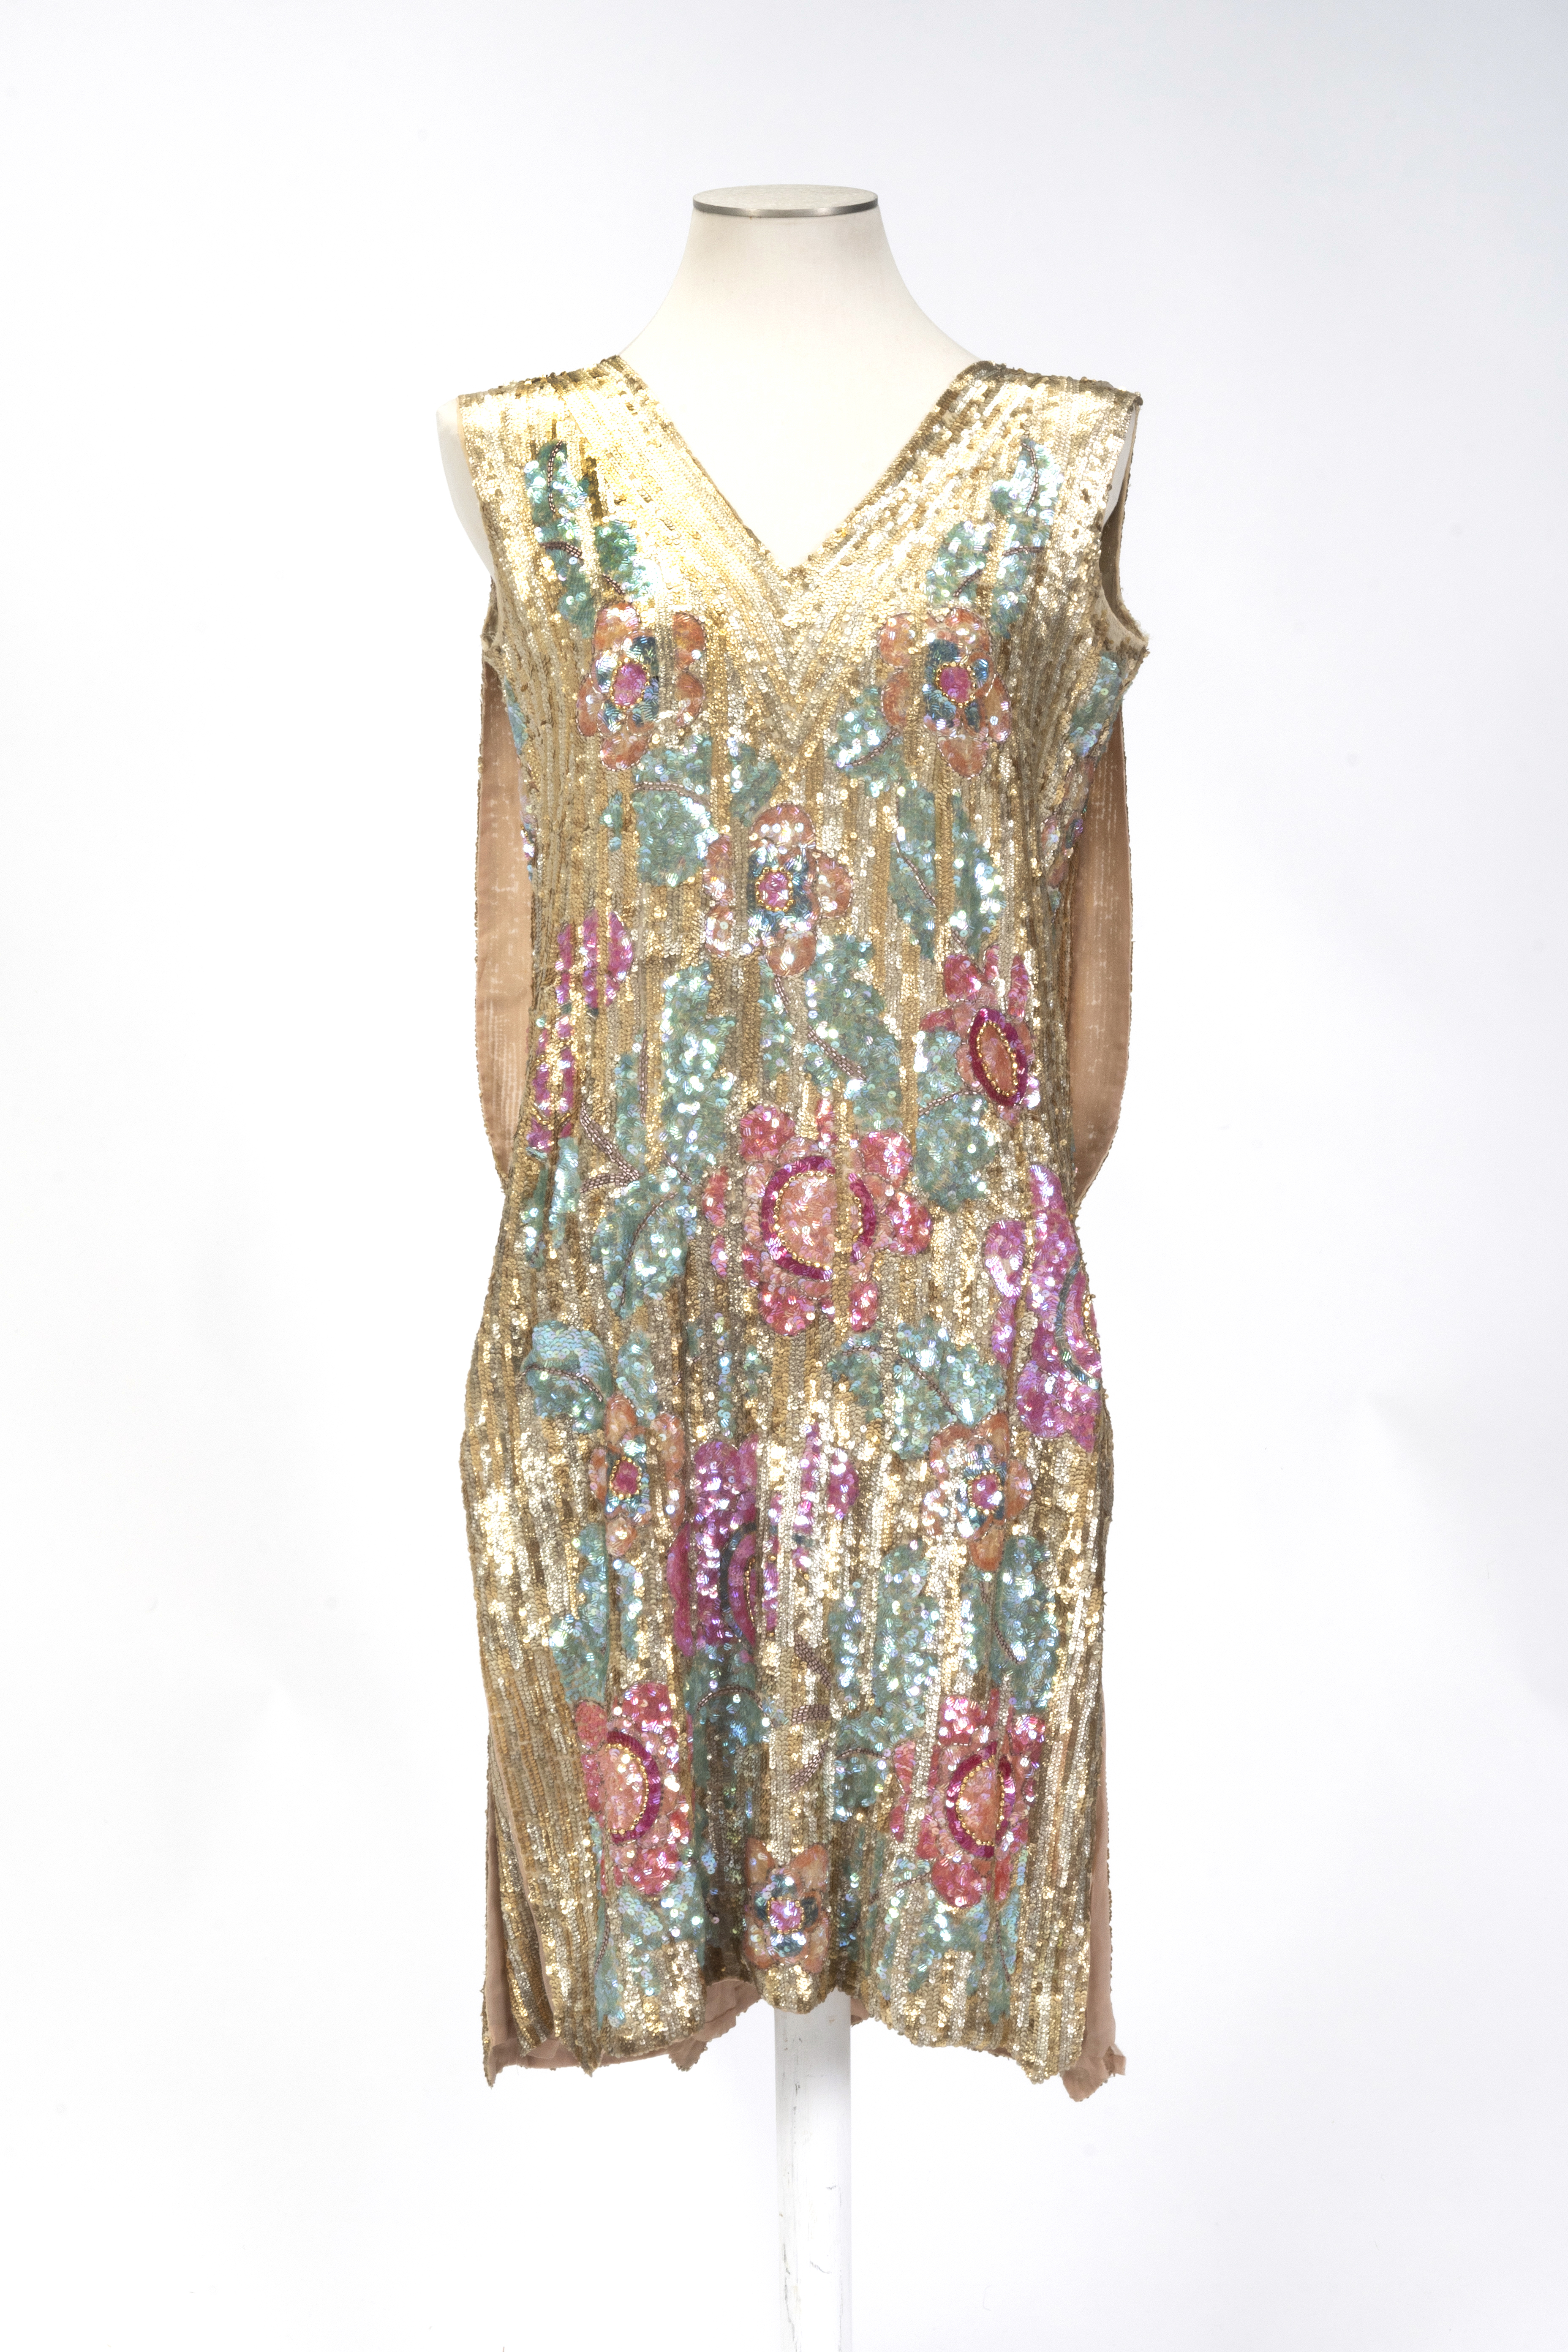 Circa-1925 R. Sacredote sequin and bead flapper dress, est. $1,000-$1,500